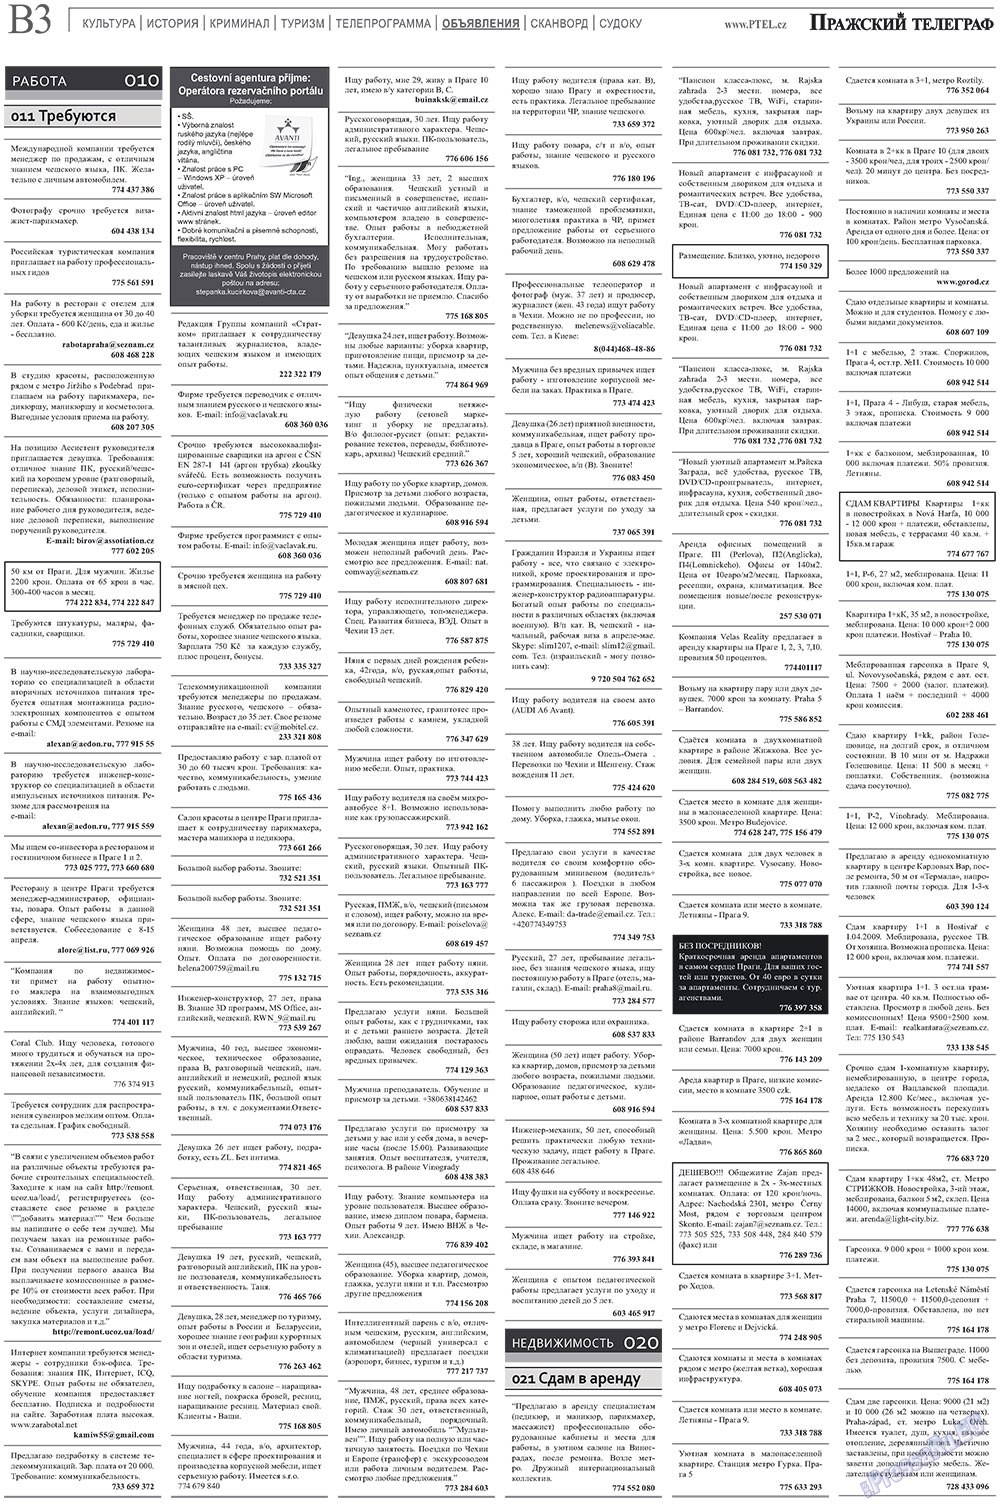 Пражский телеграф, газета. 2009 №10 стр.11